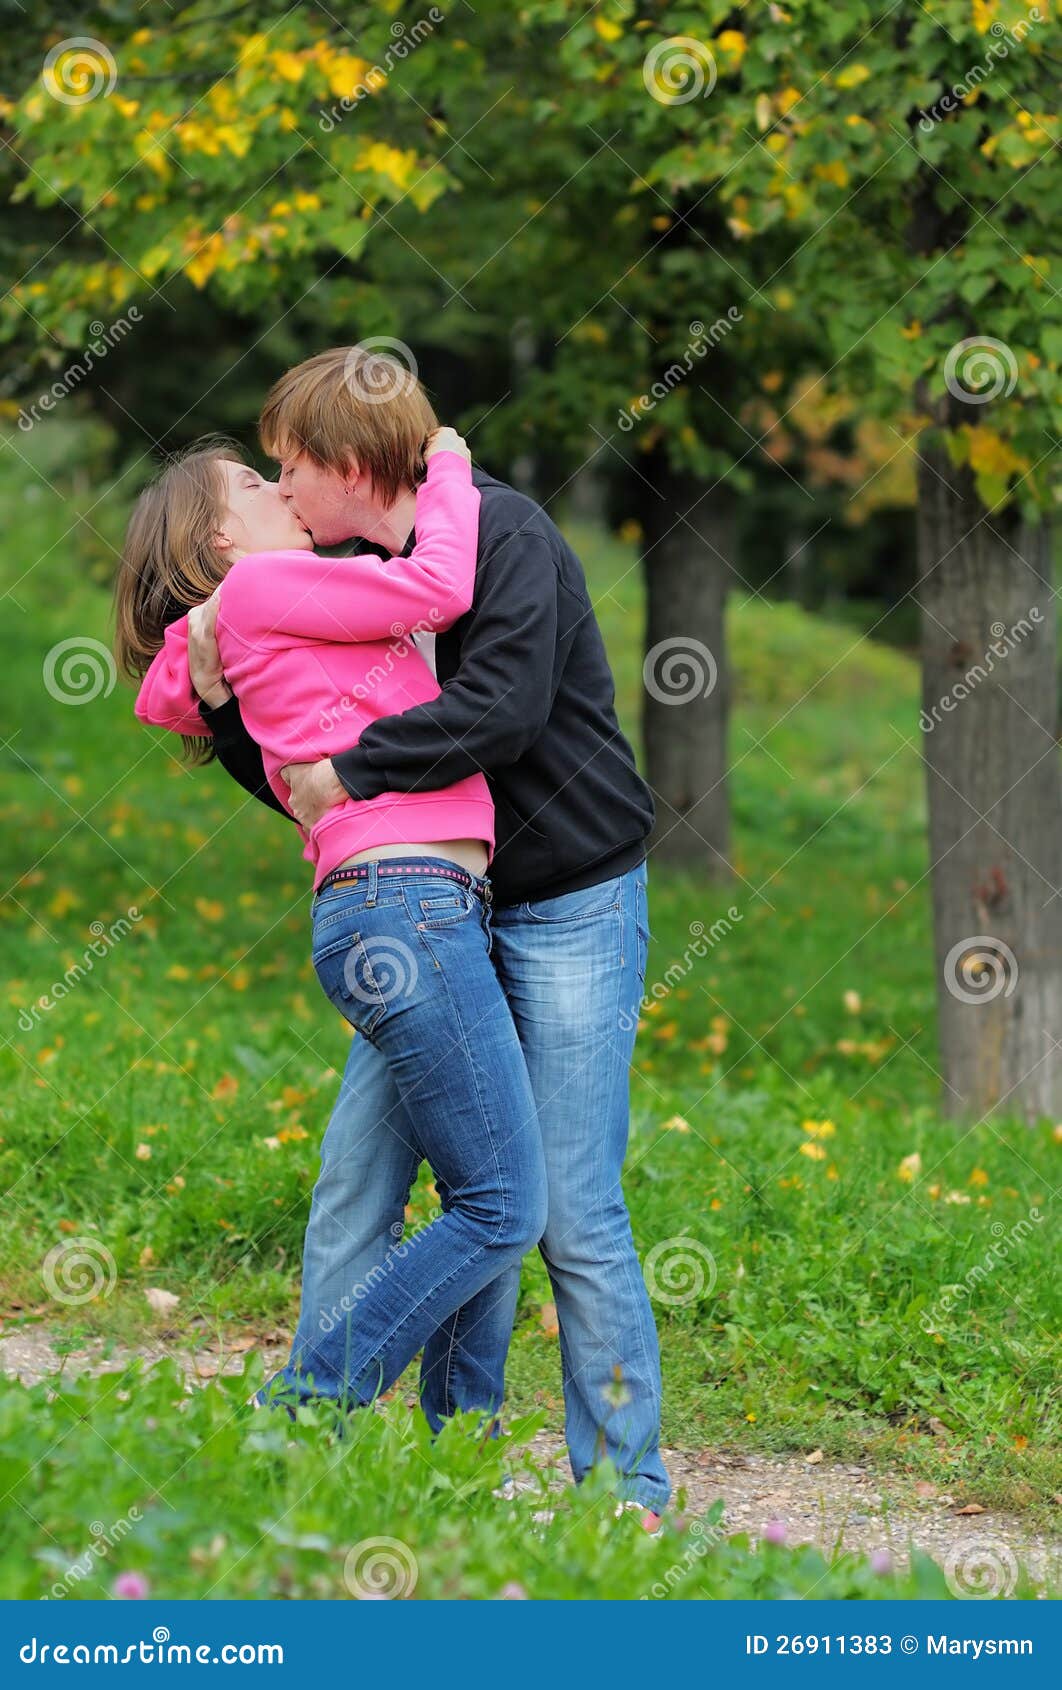 Ethnic boyfriend kissing cheerful girlfriend sitting together in grass ·  Free Stock Photo